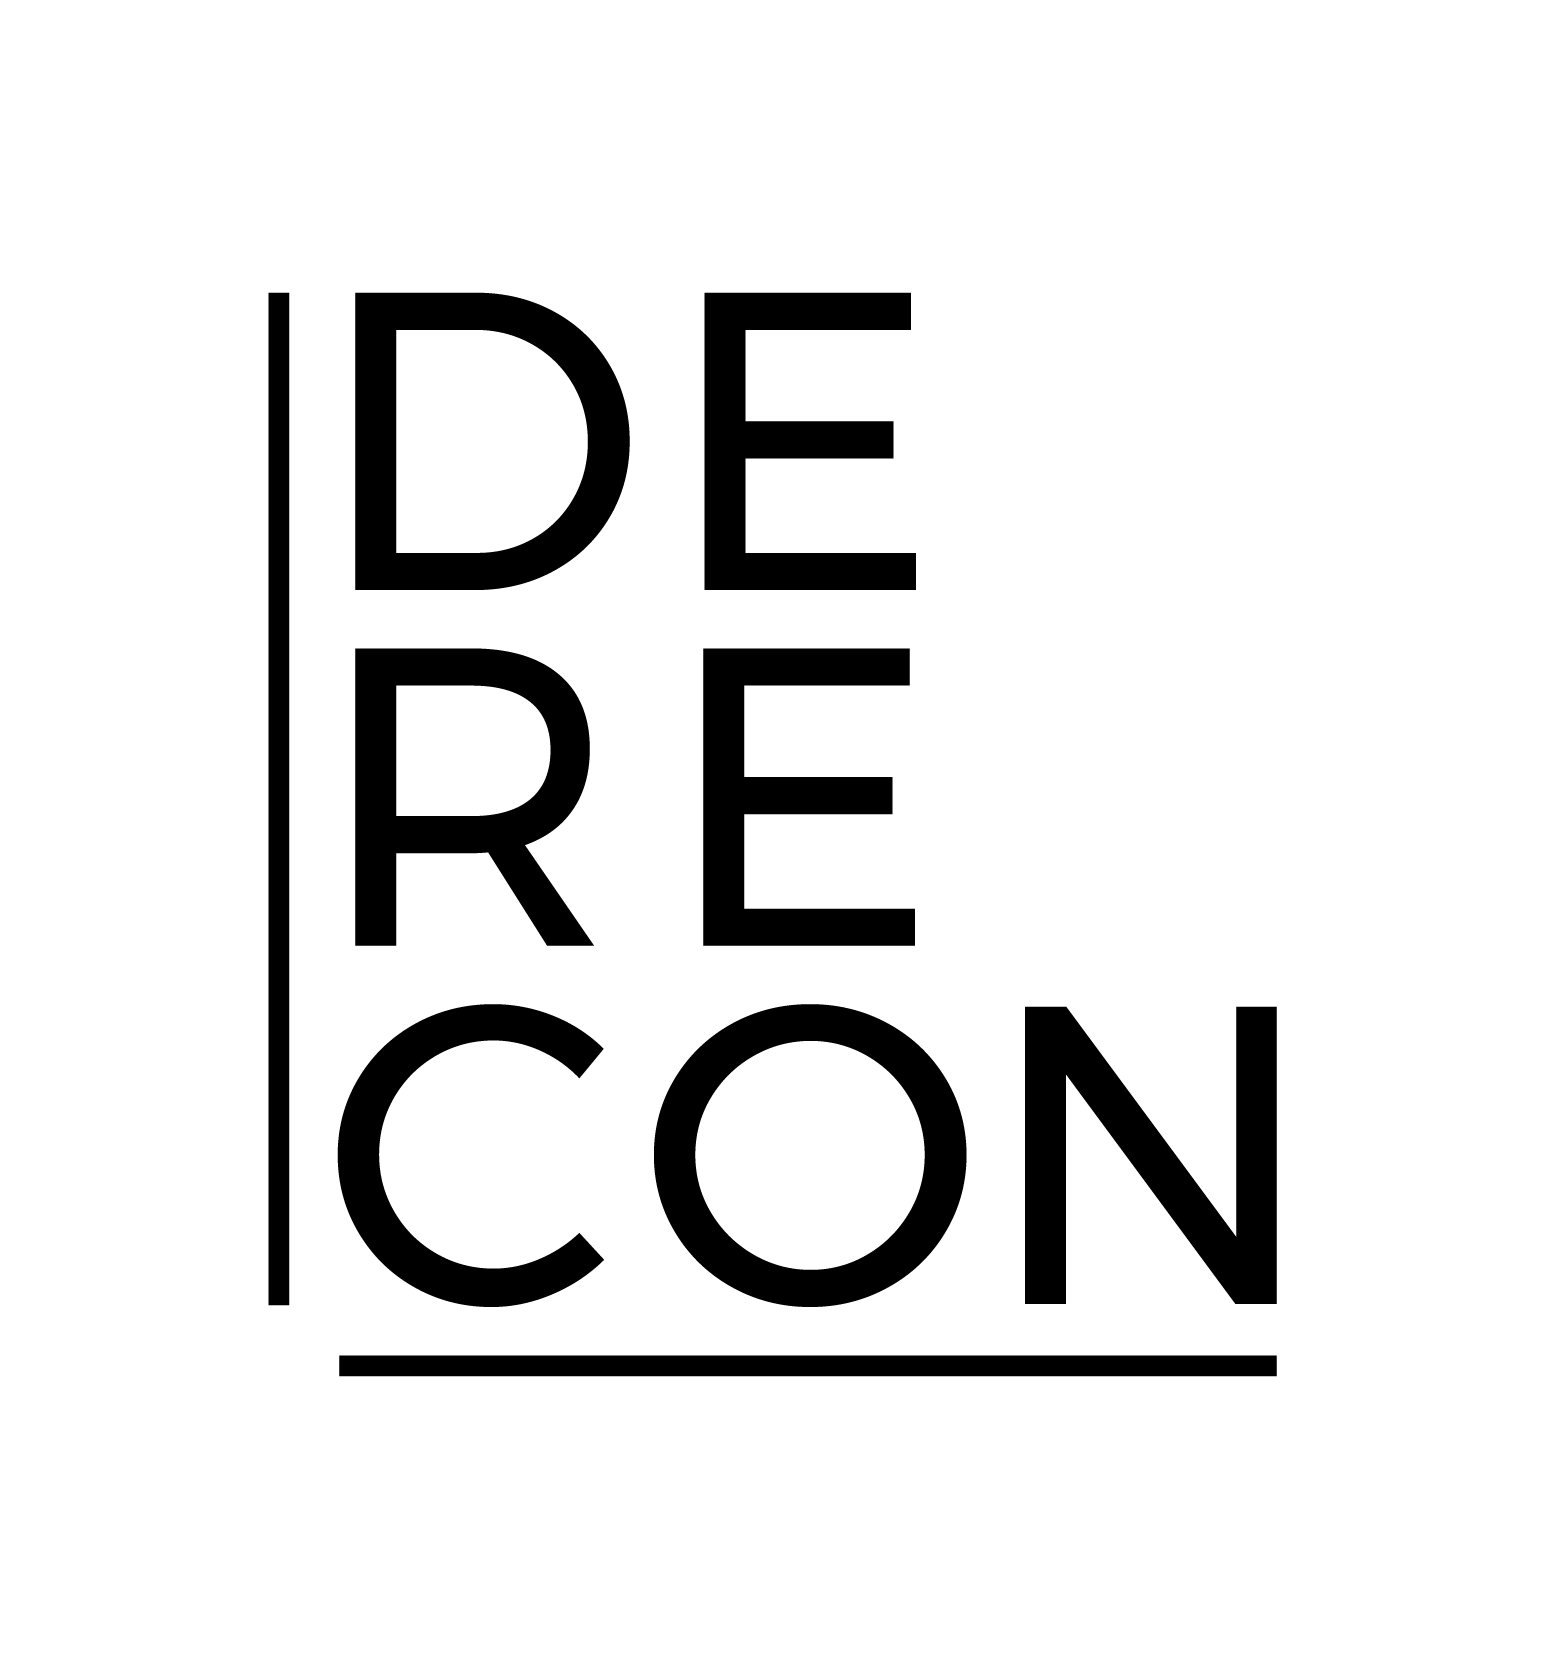 aannemers afbraakwerken Deurne DERECON